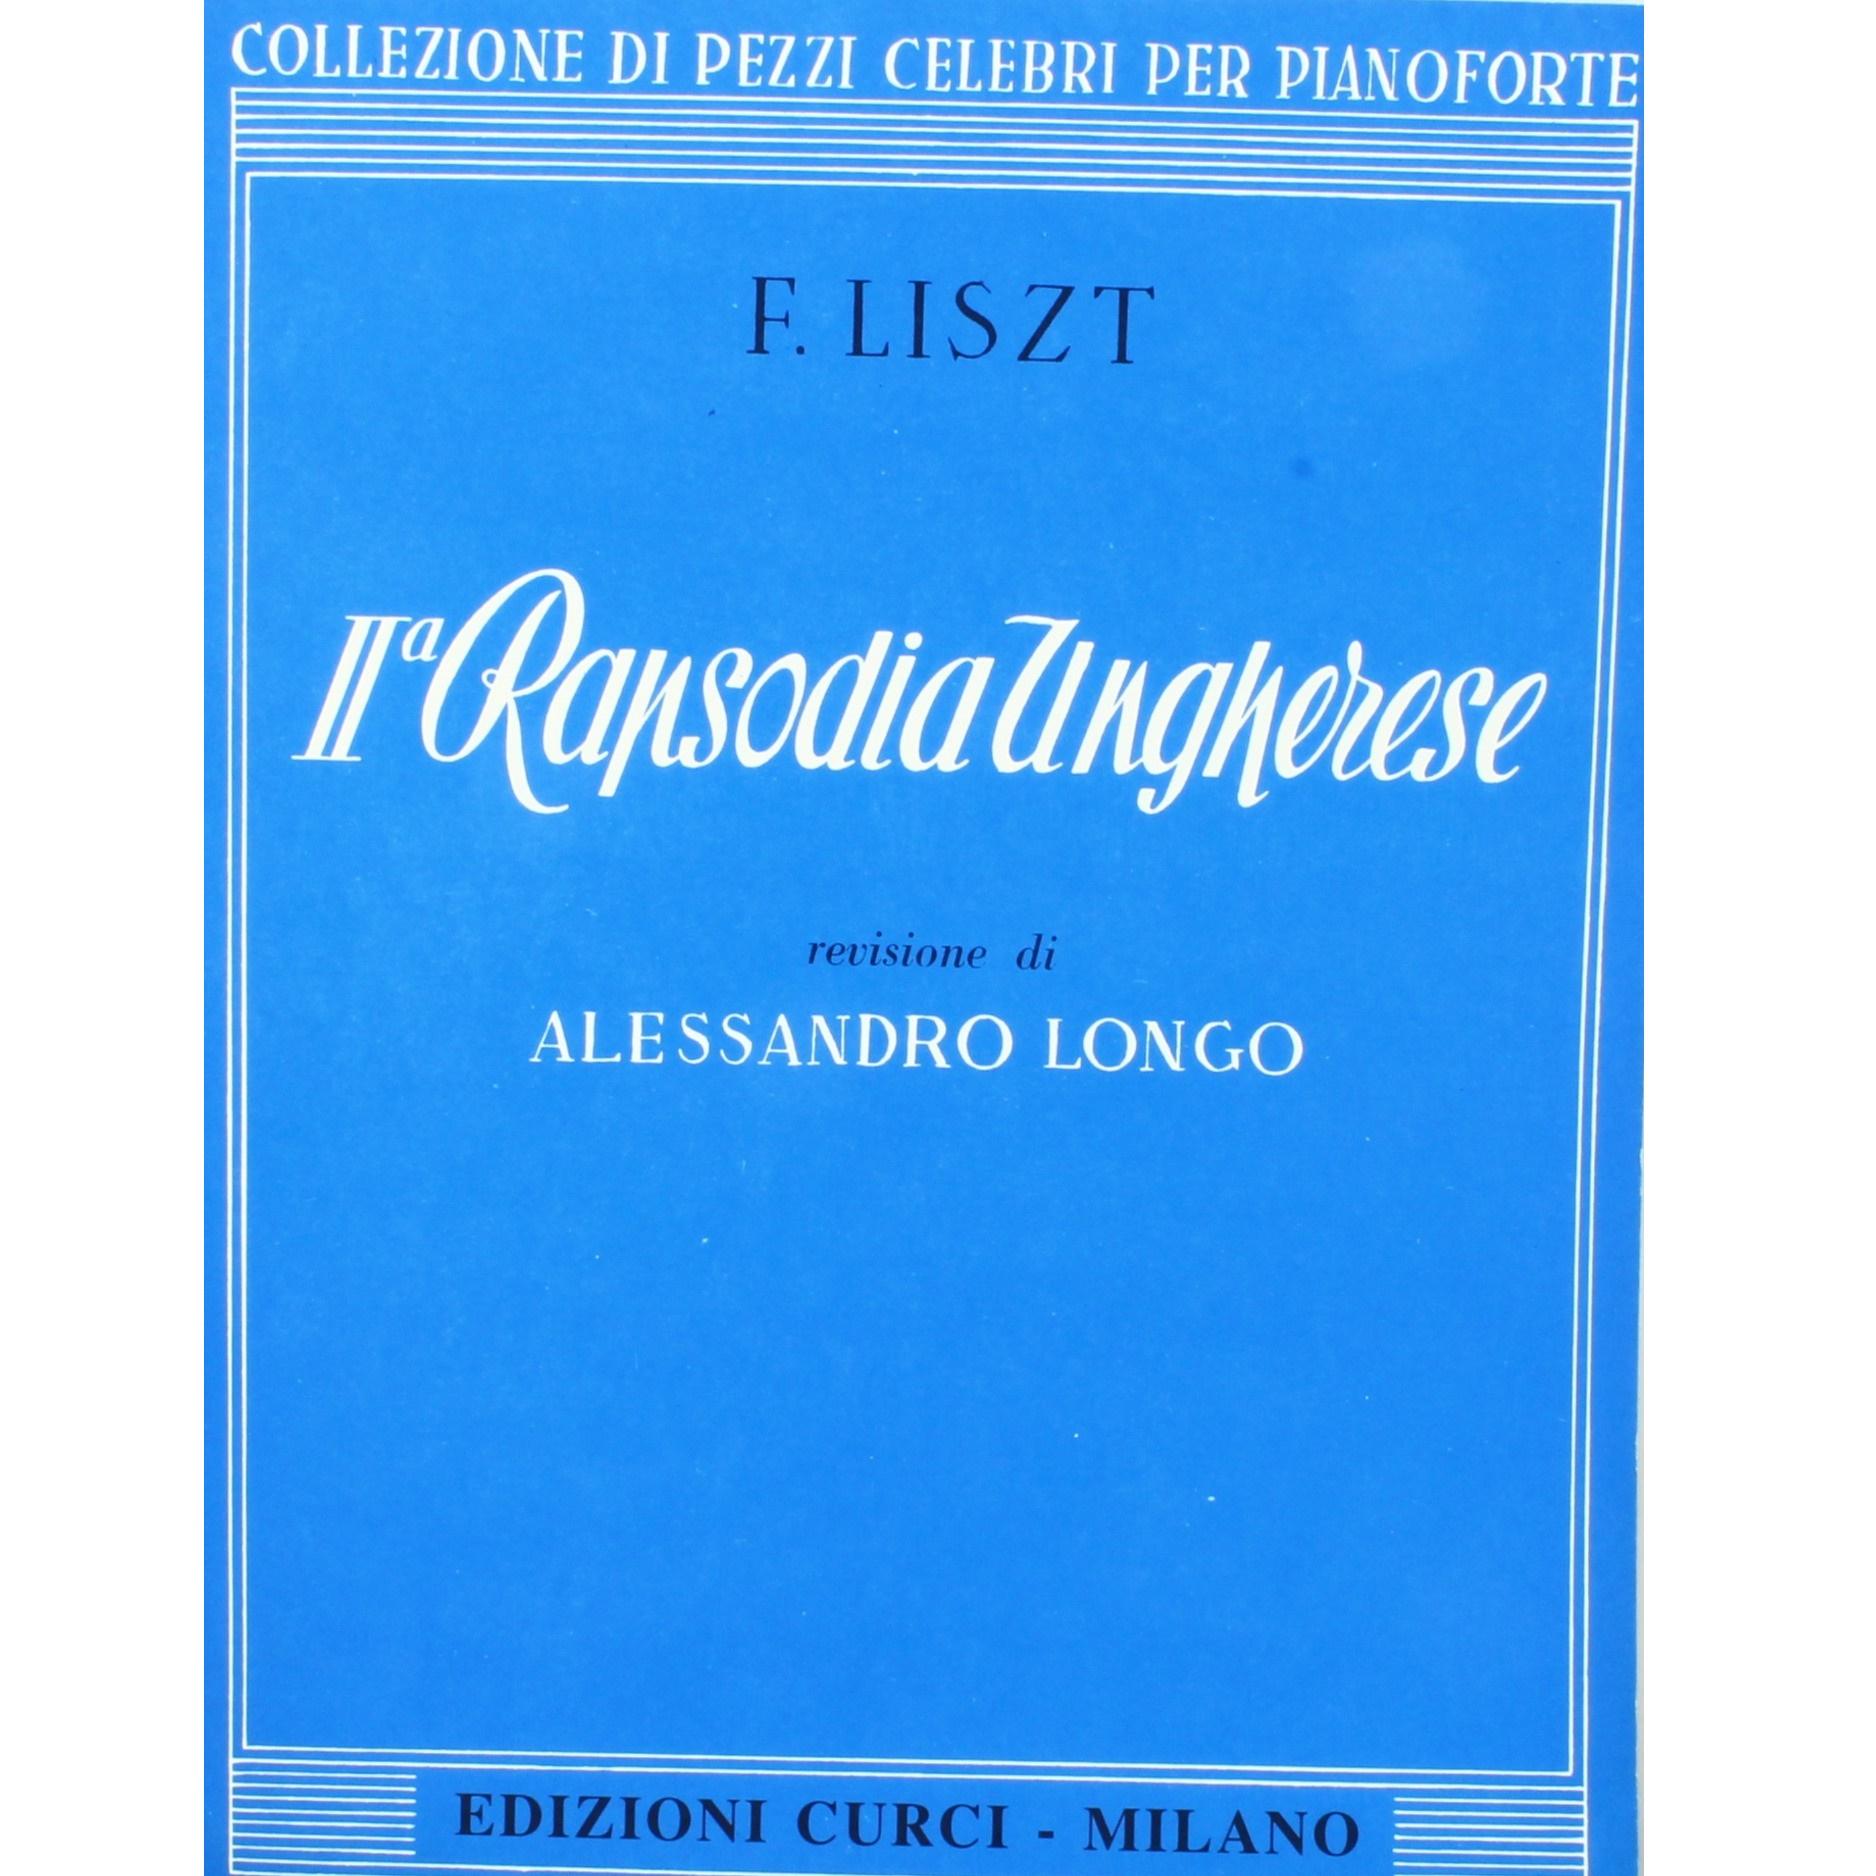 Liszt II Rapsodia Ungherese (Longo) - Edizioni Curci Milano